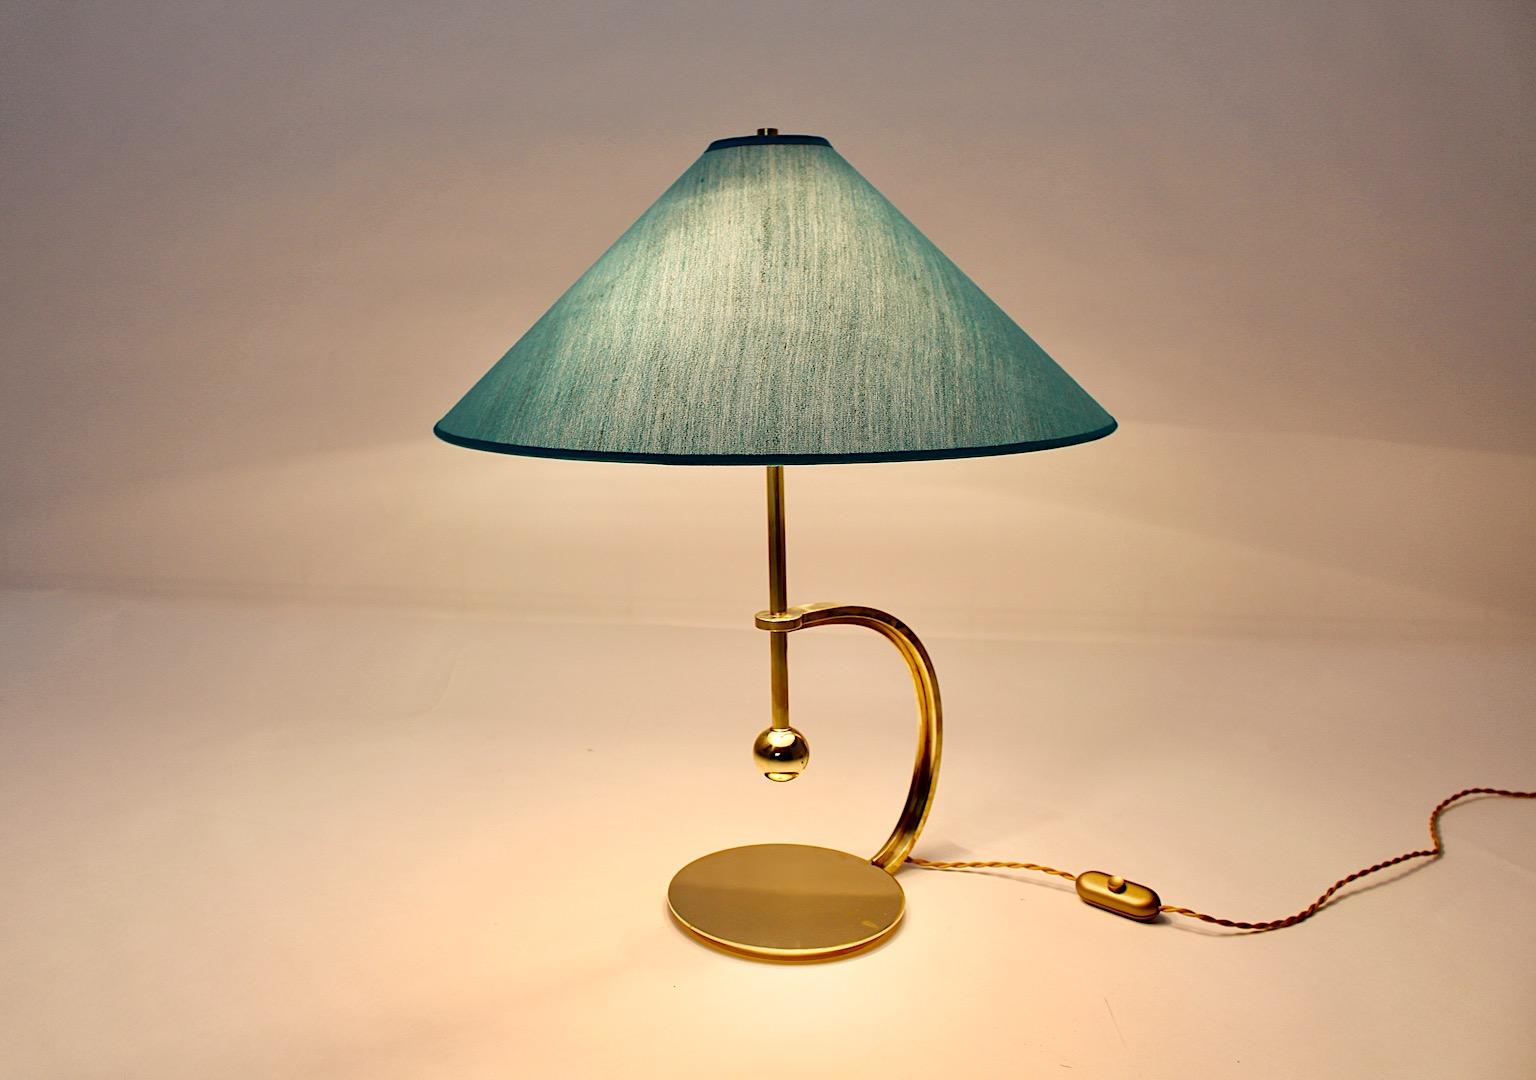 Austrian Art Deco Brass Vintage Table Lamp Blue Teal Textile Shade Vienna C 1925 For Sale